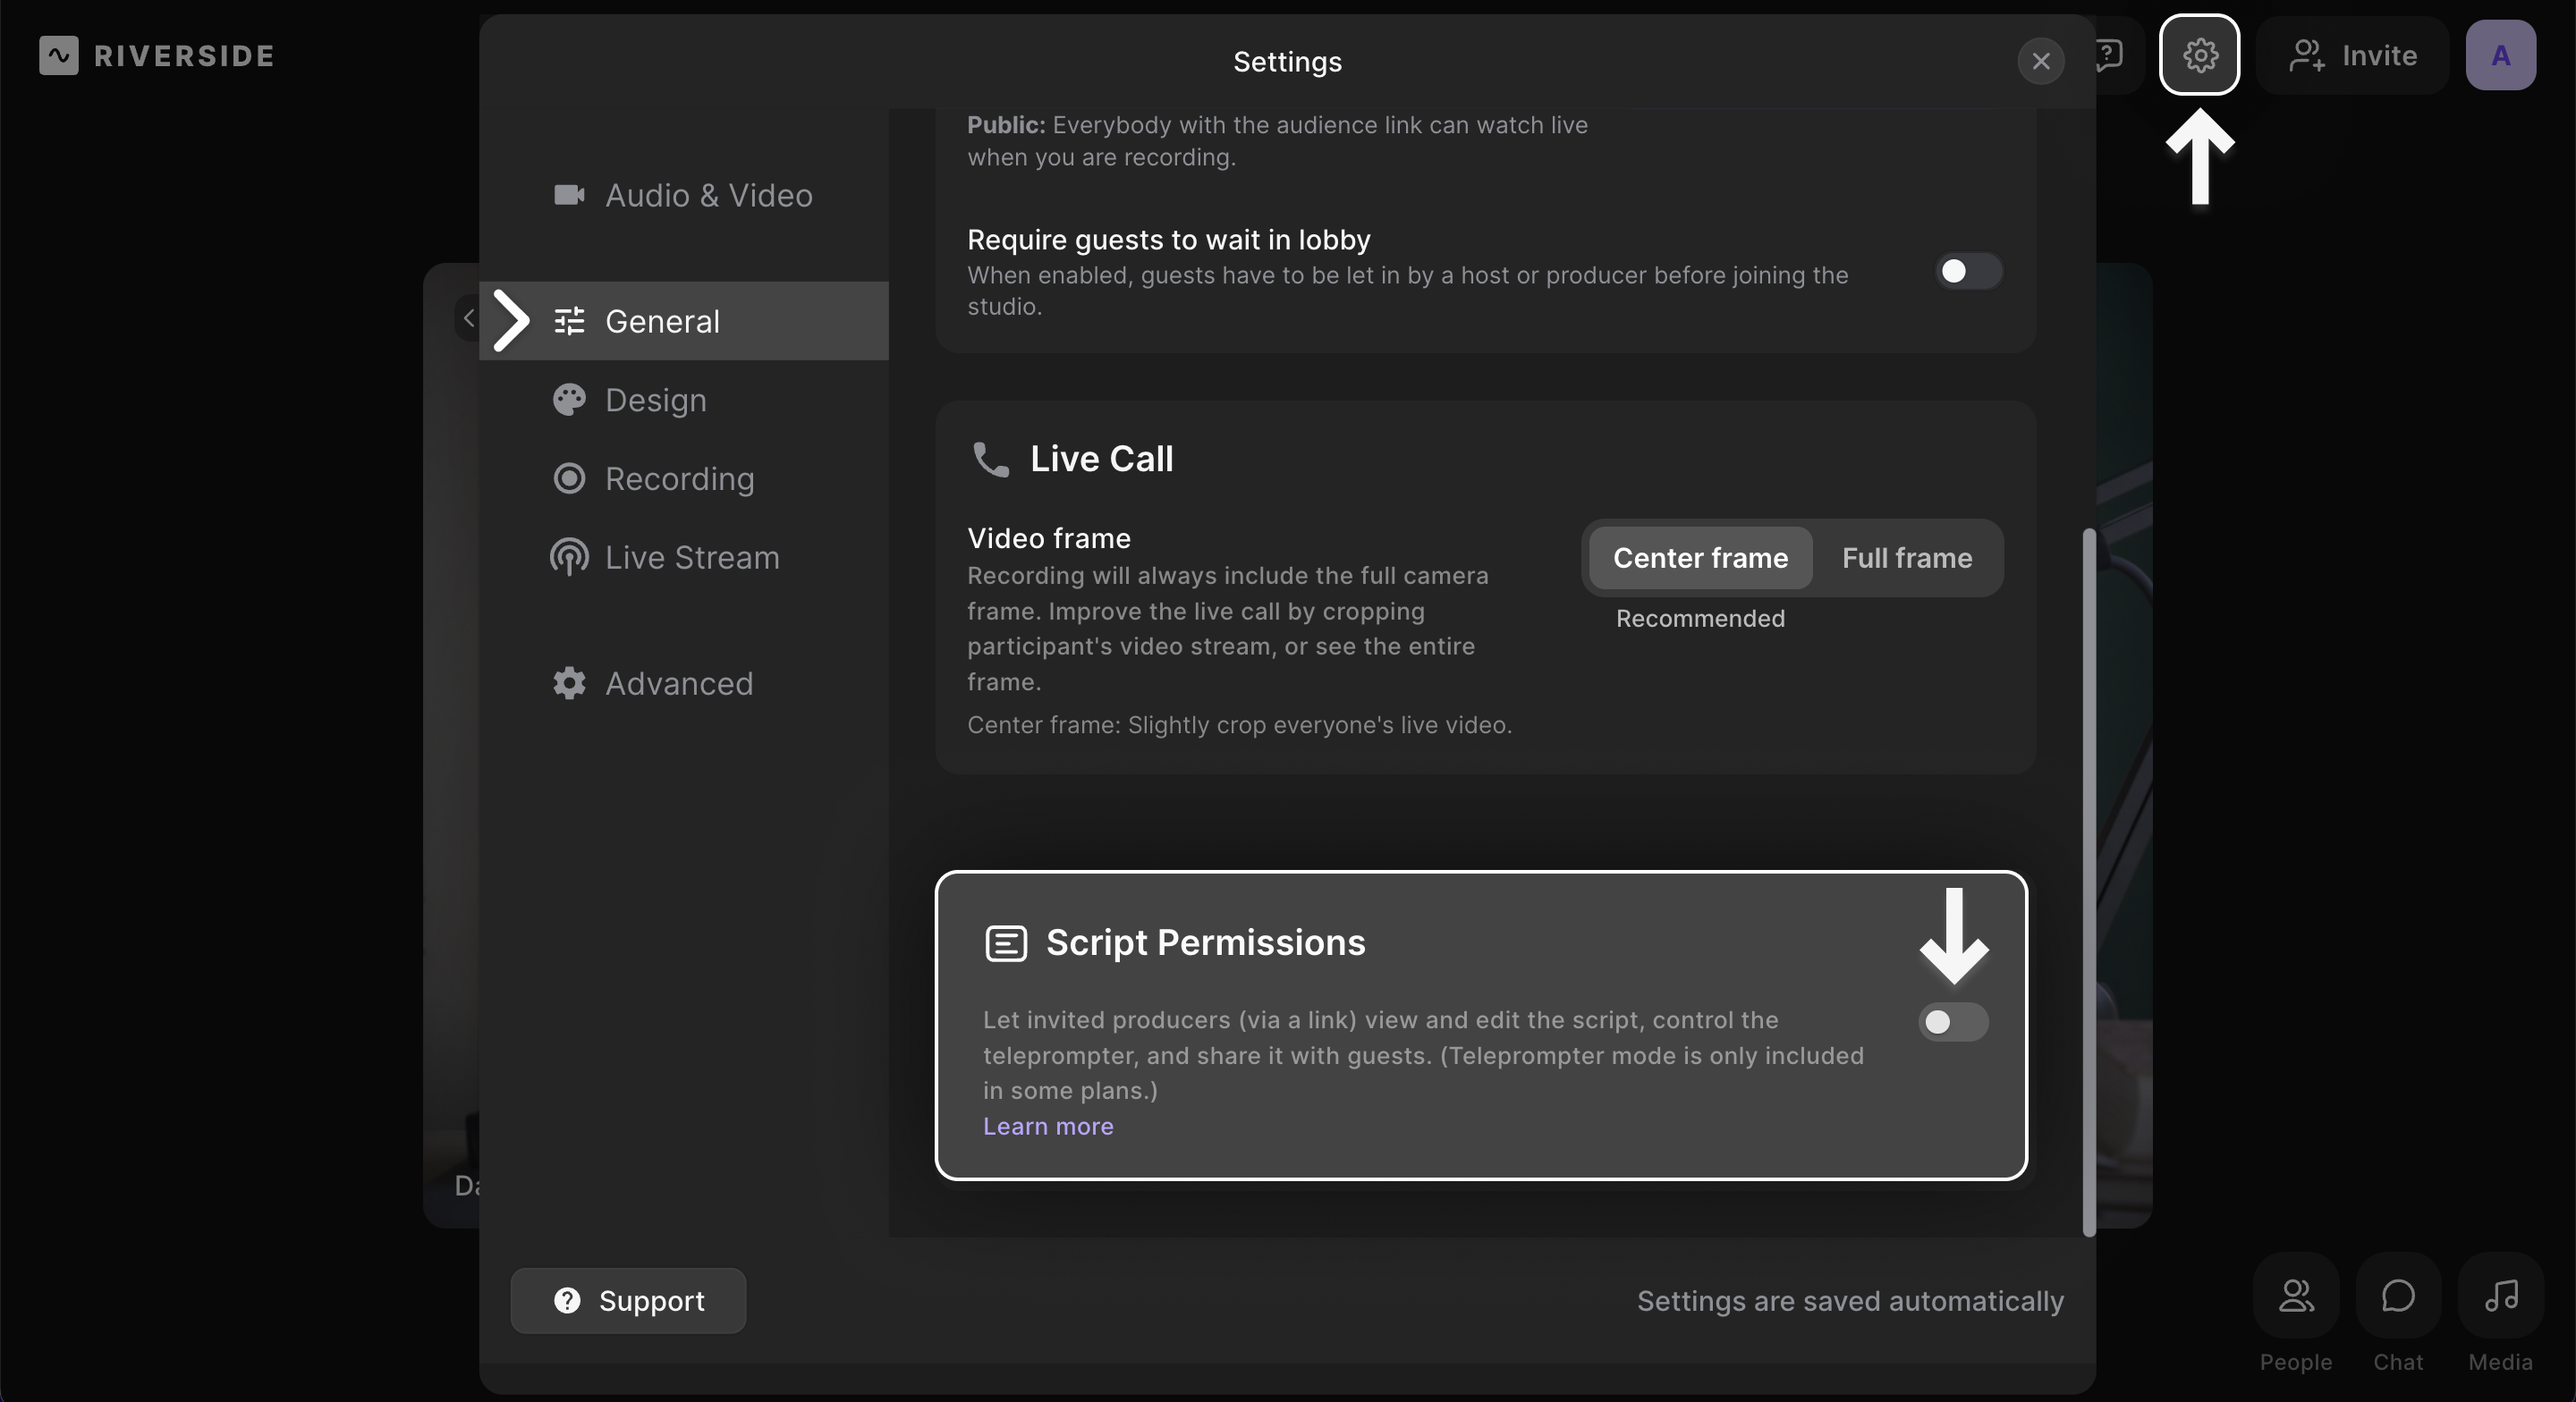 studio_settings-script_permissions.png